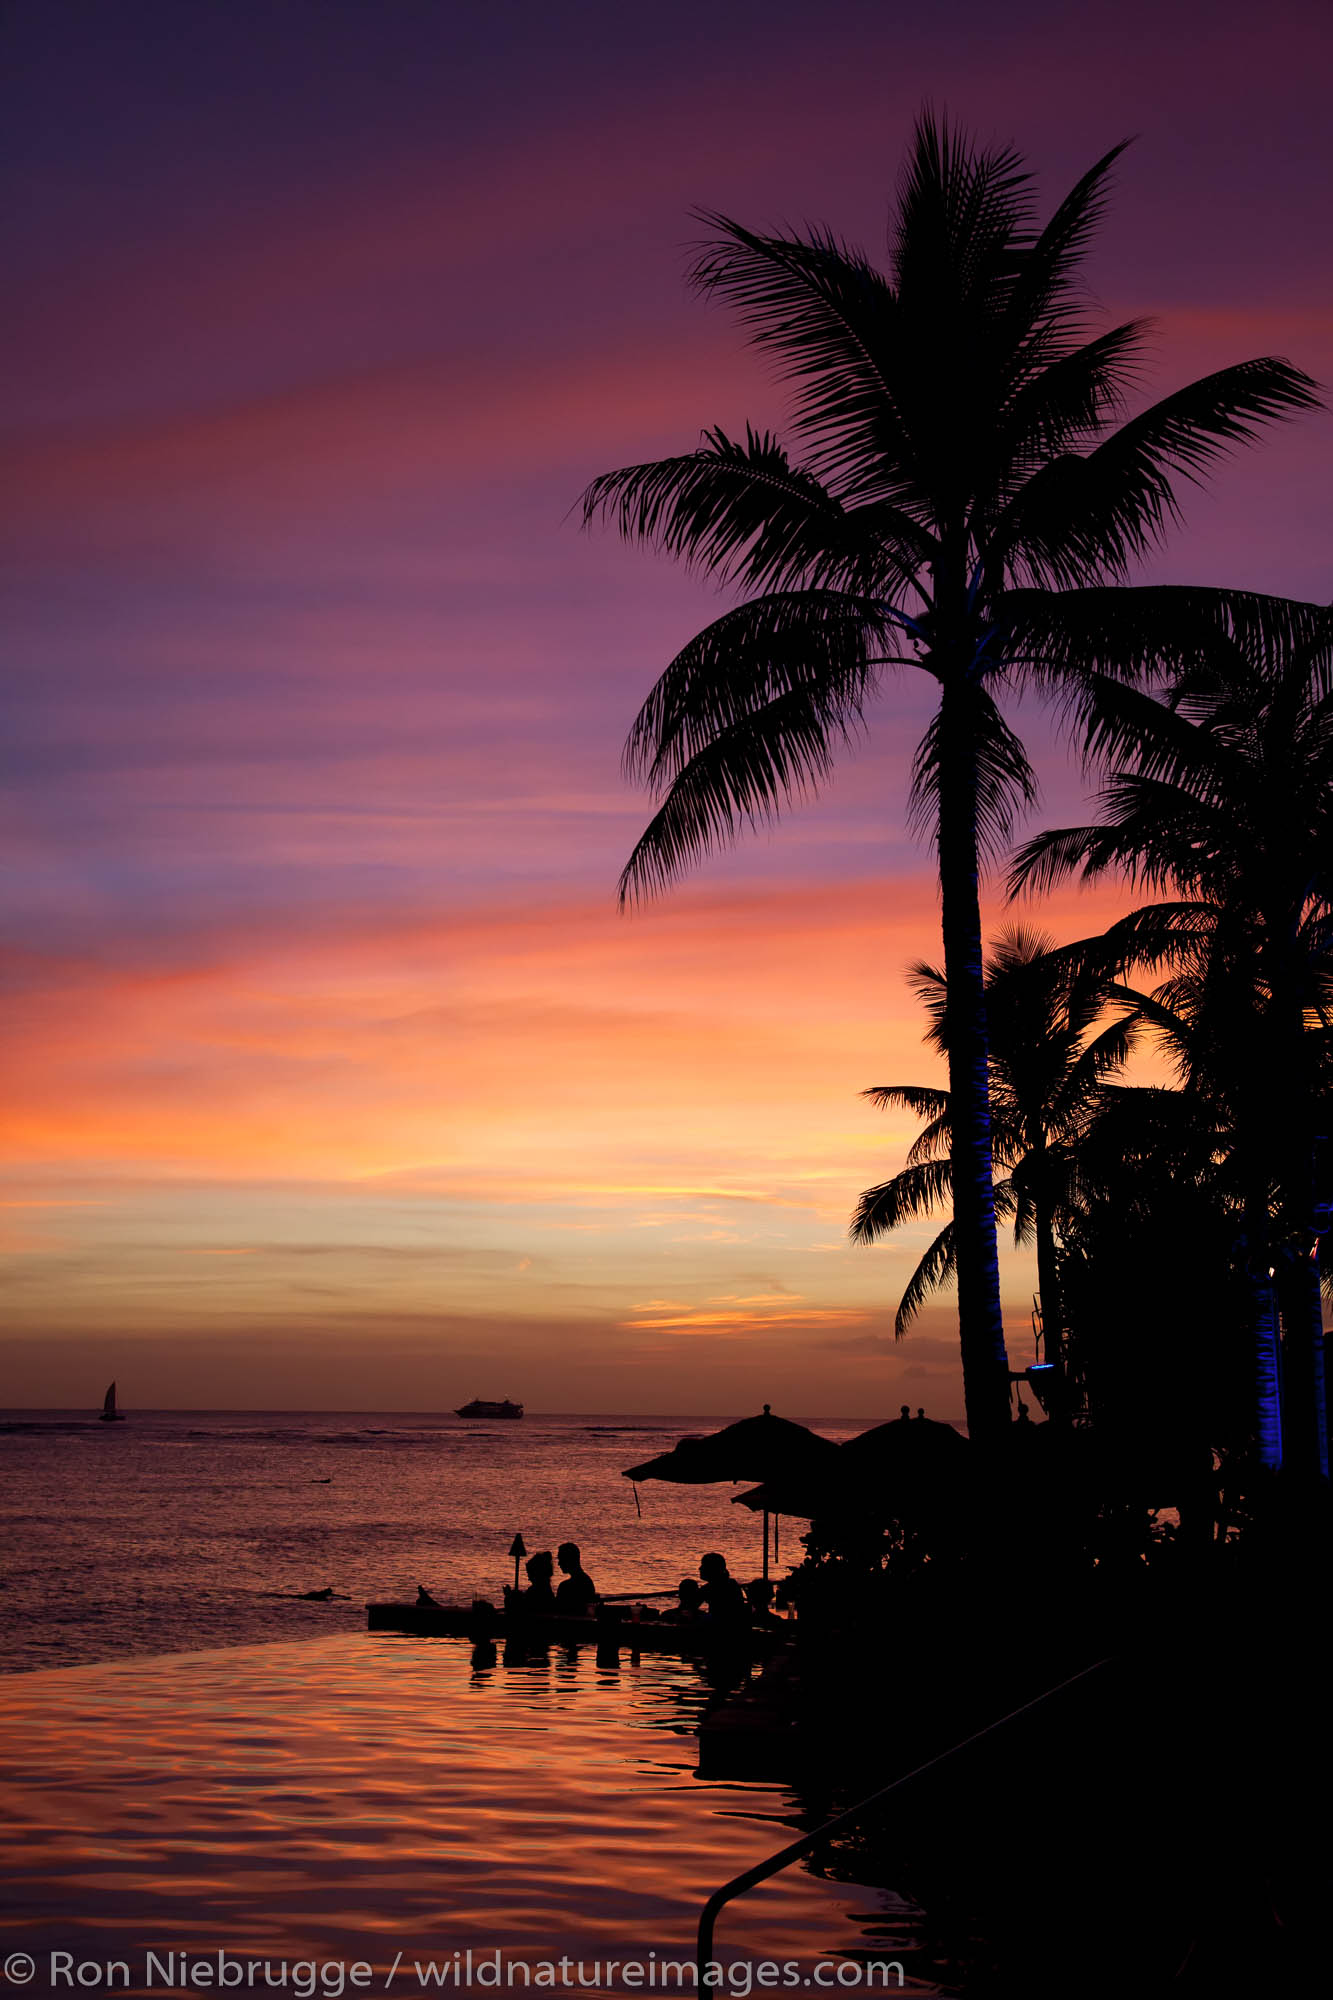 Sunset and the pool at the Sheraton Waikiki, Waikiki Beach, Honolulu, Hawaii.